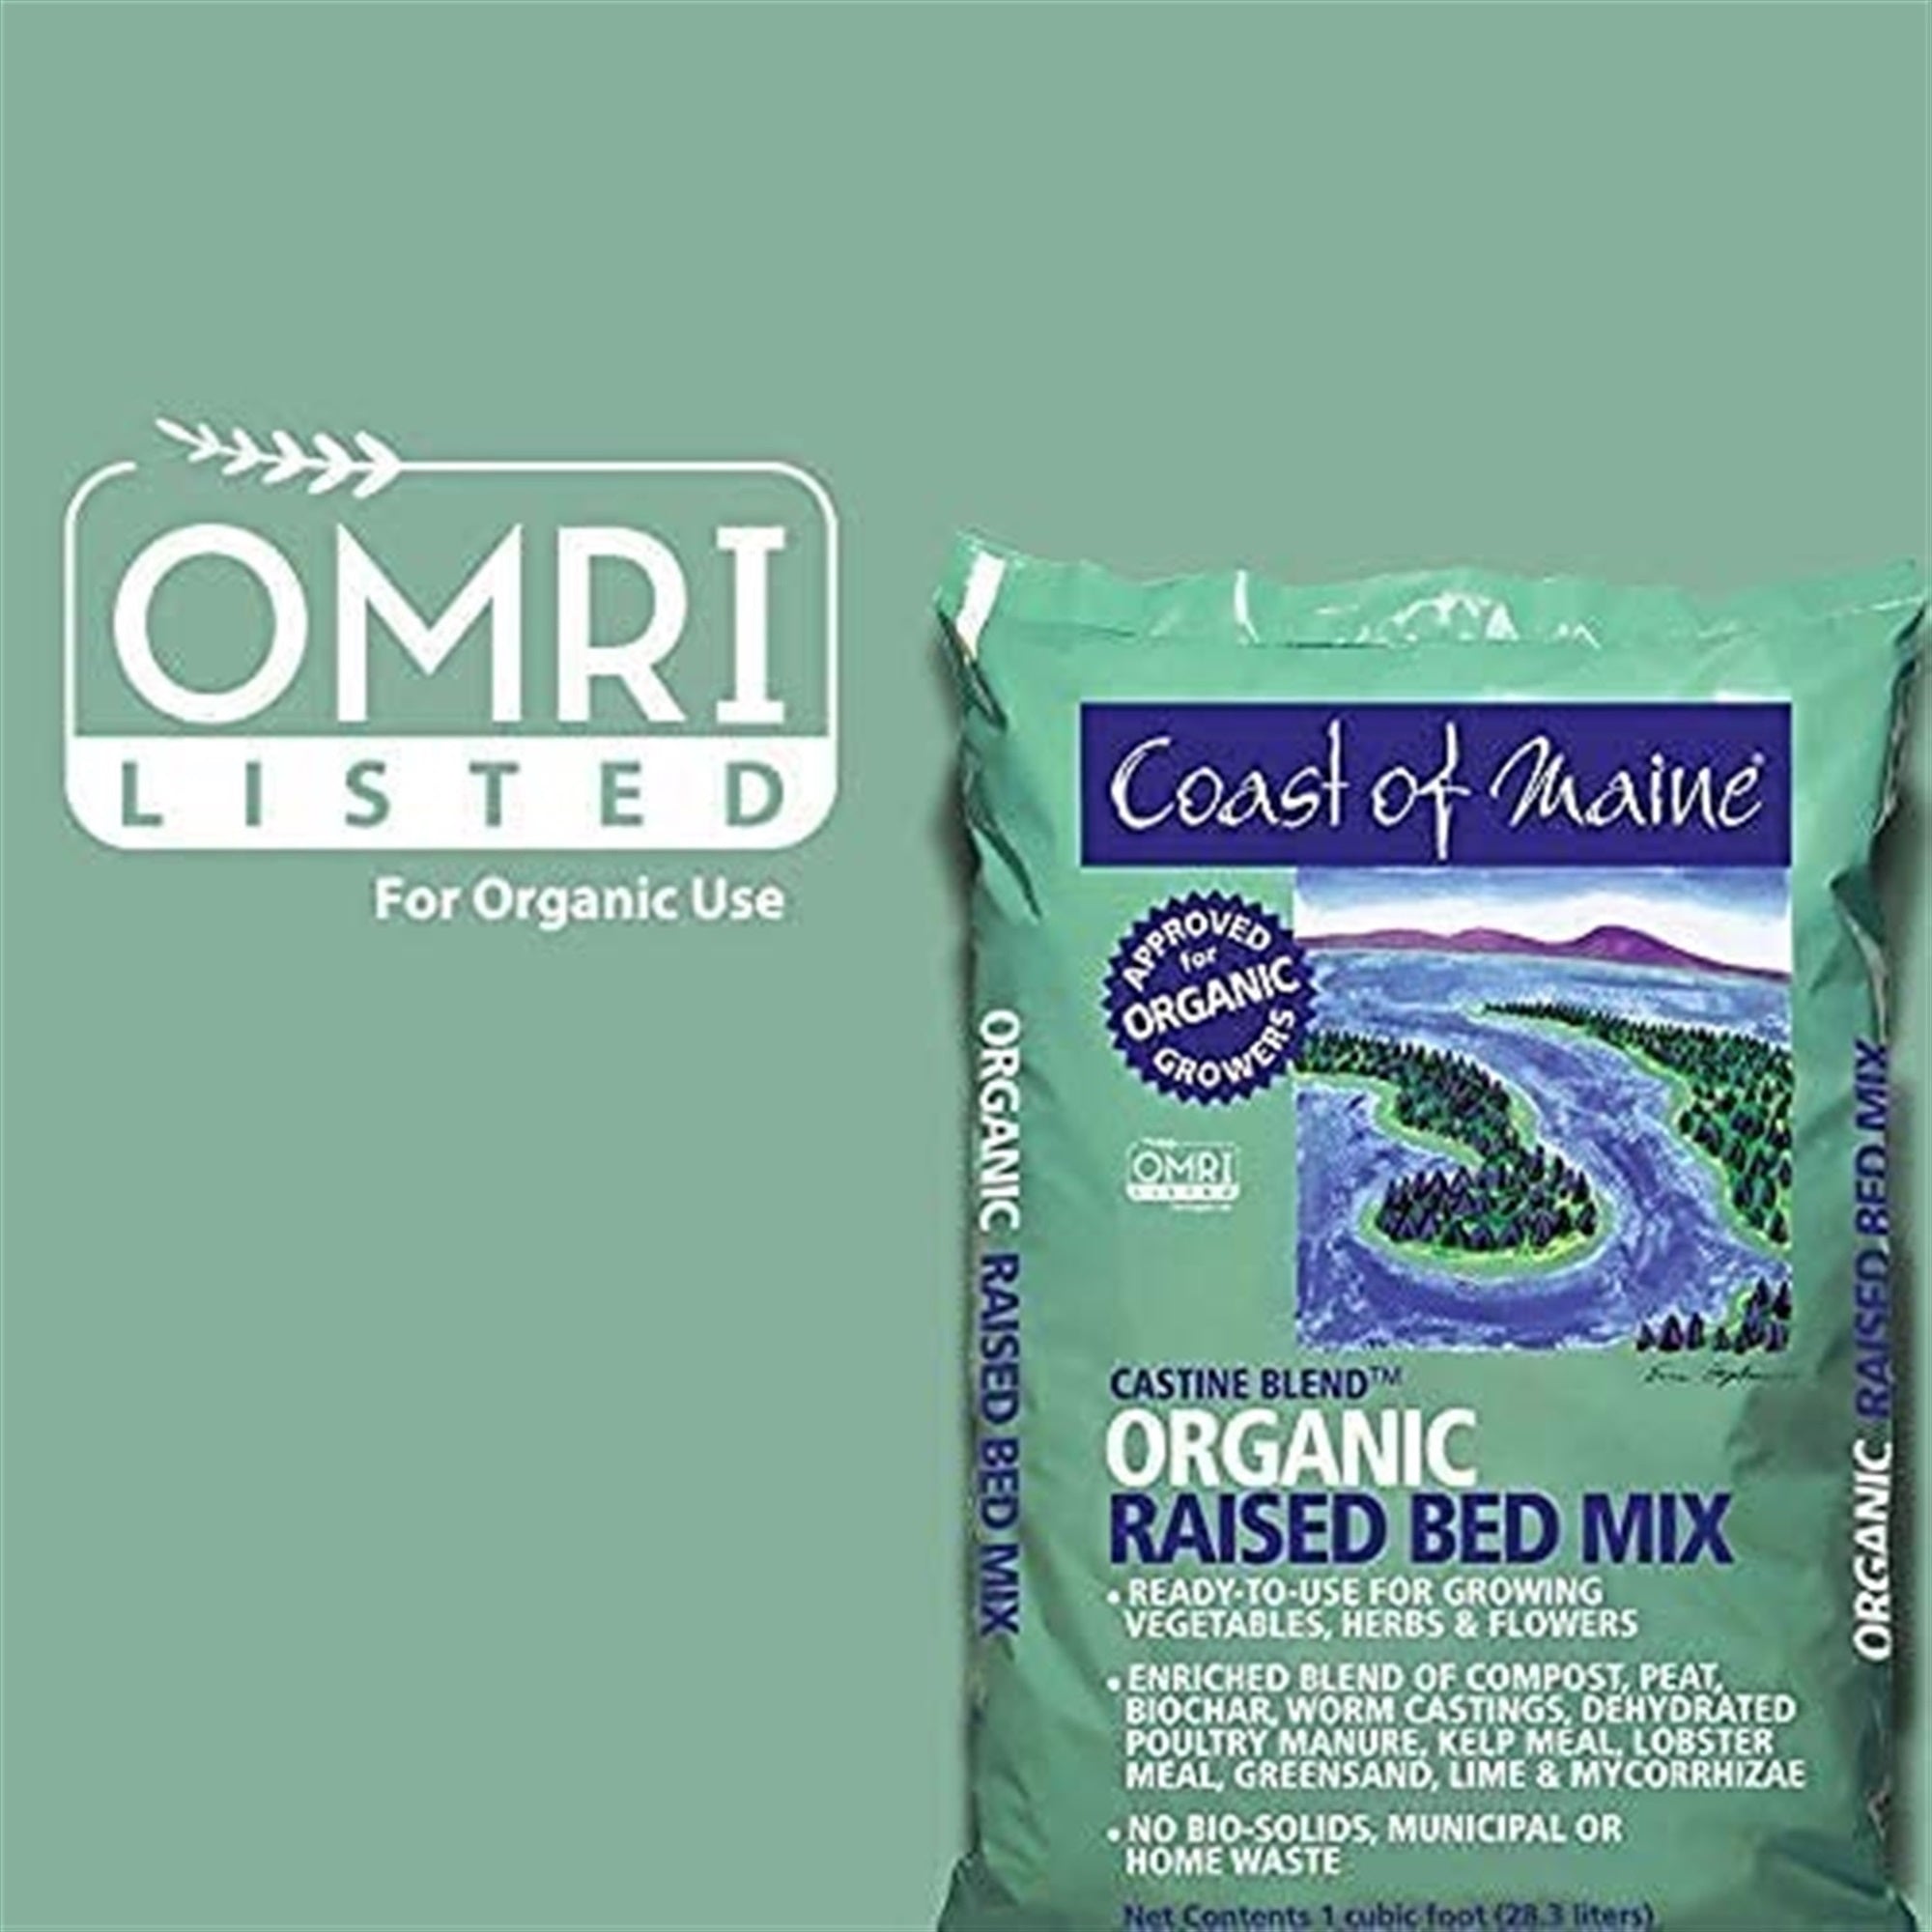 Coast of Maine Castine Blend, Organic Raised Bed Mix